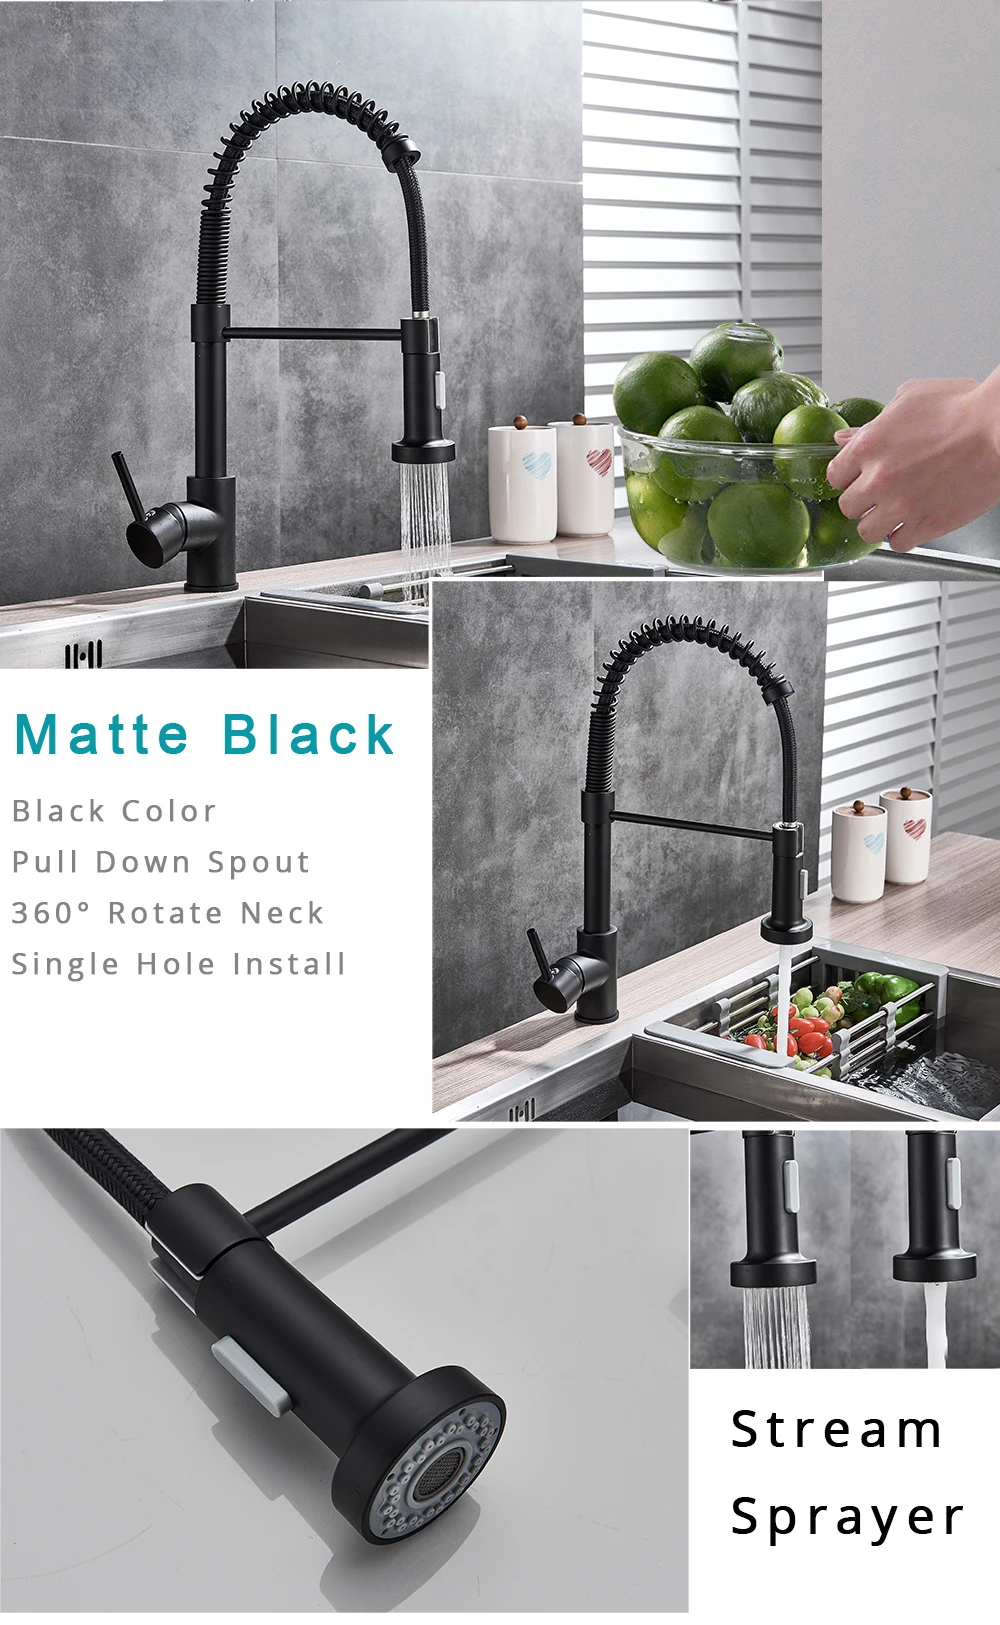 Rozin Matte Black Kitchen Faucet Deck Mounted Mixer Tap 360 Degree Rotation Stream Sprayer Nozzle Kitchen Sink Hot Cold Taps